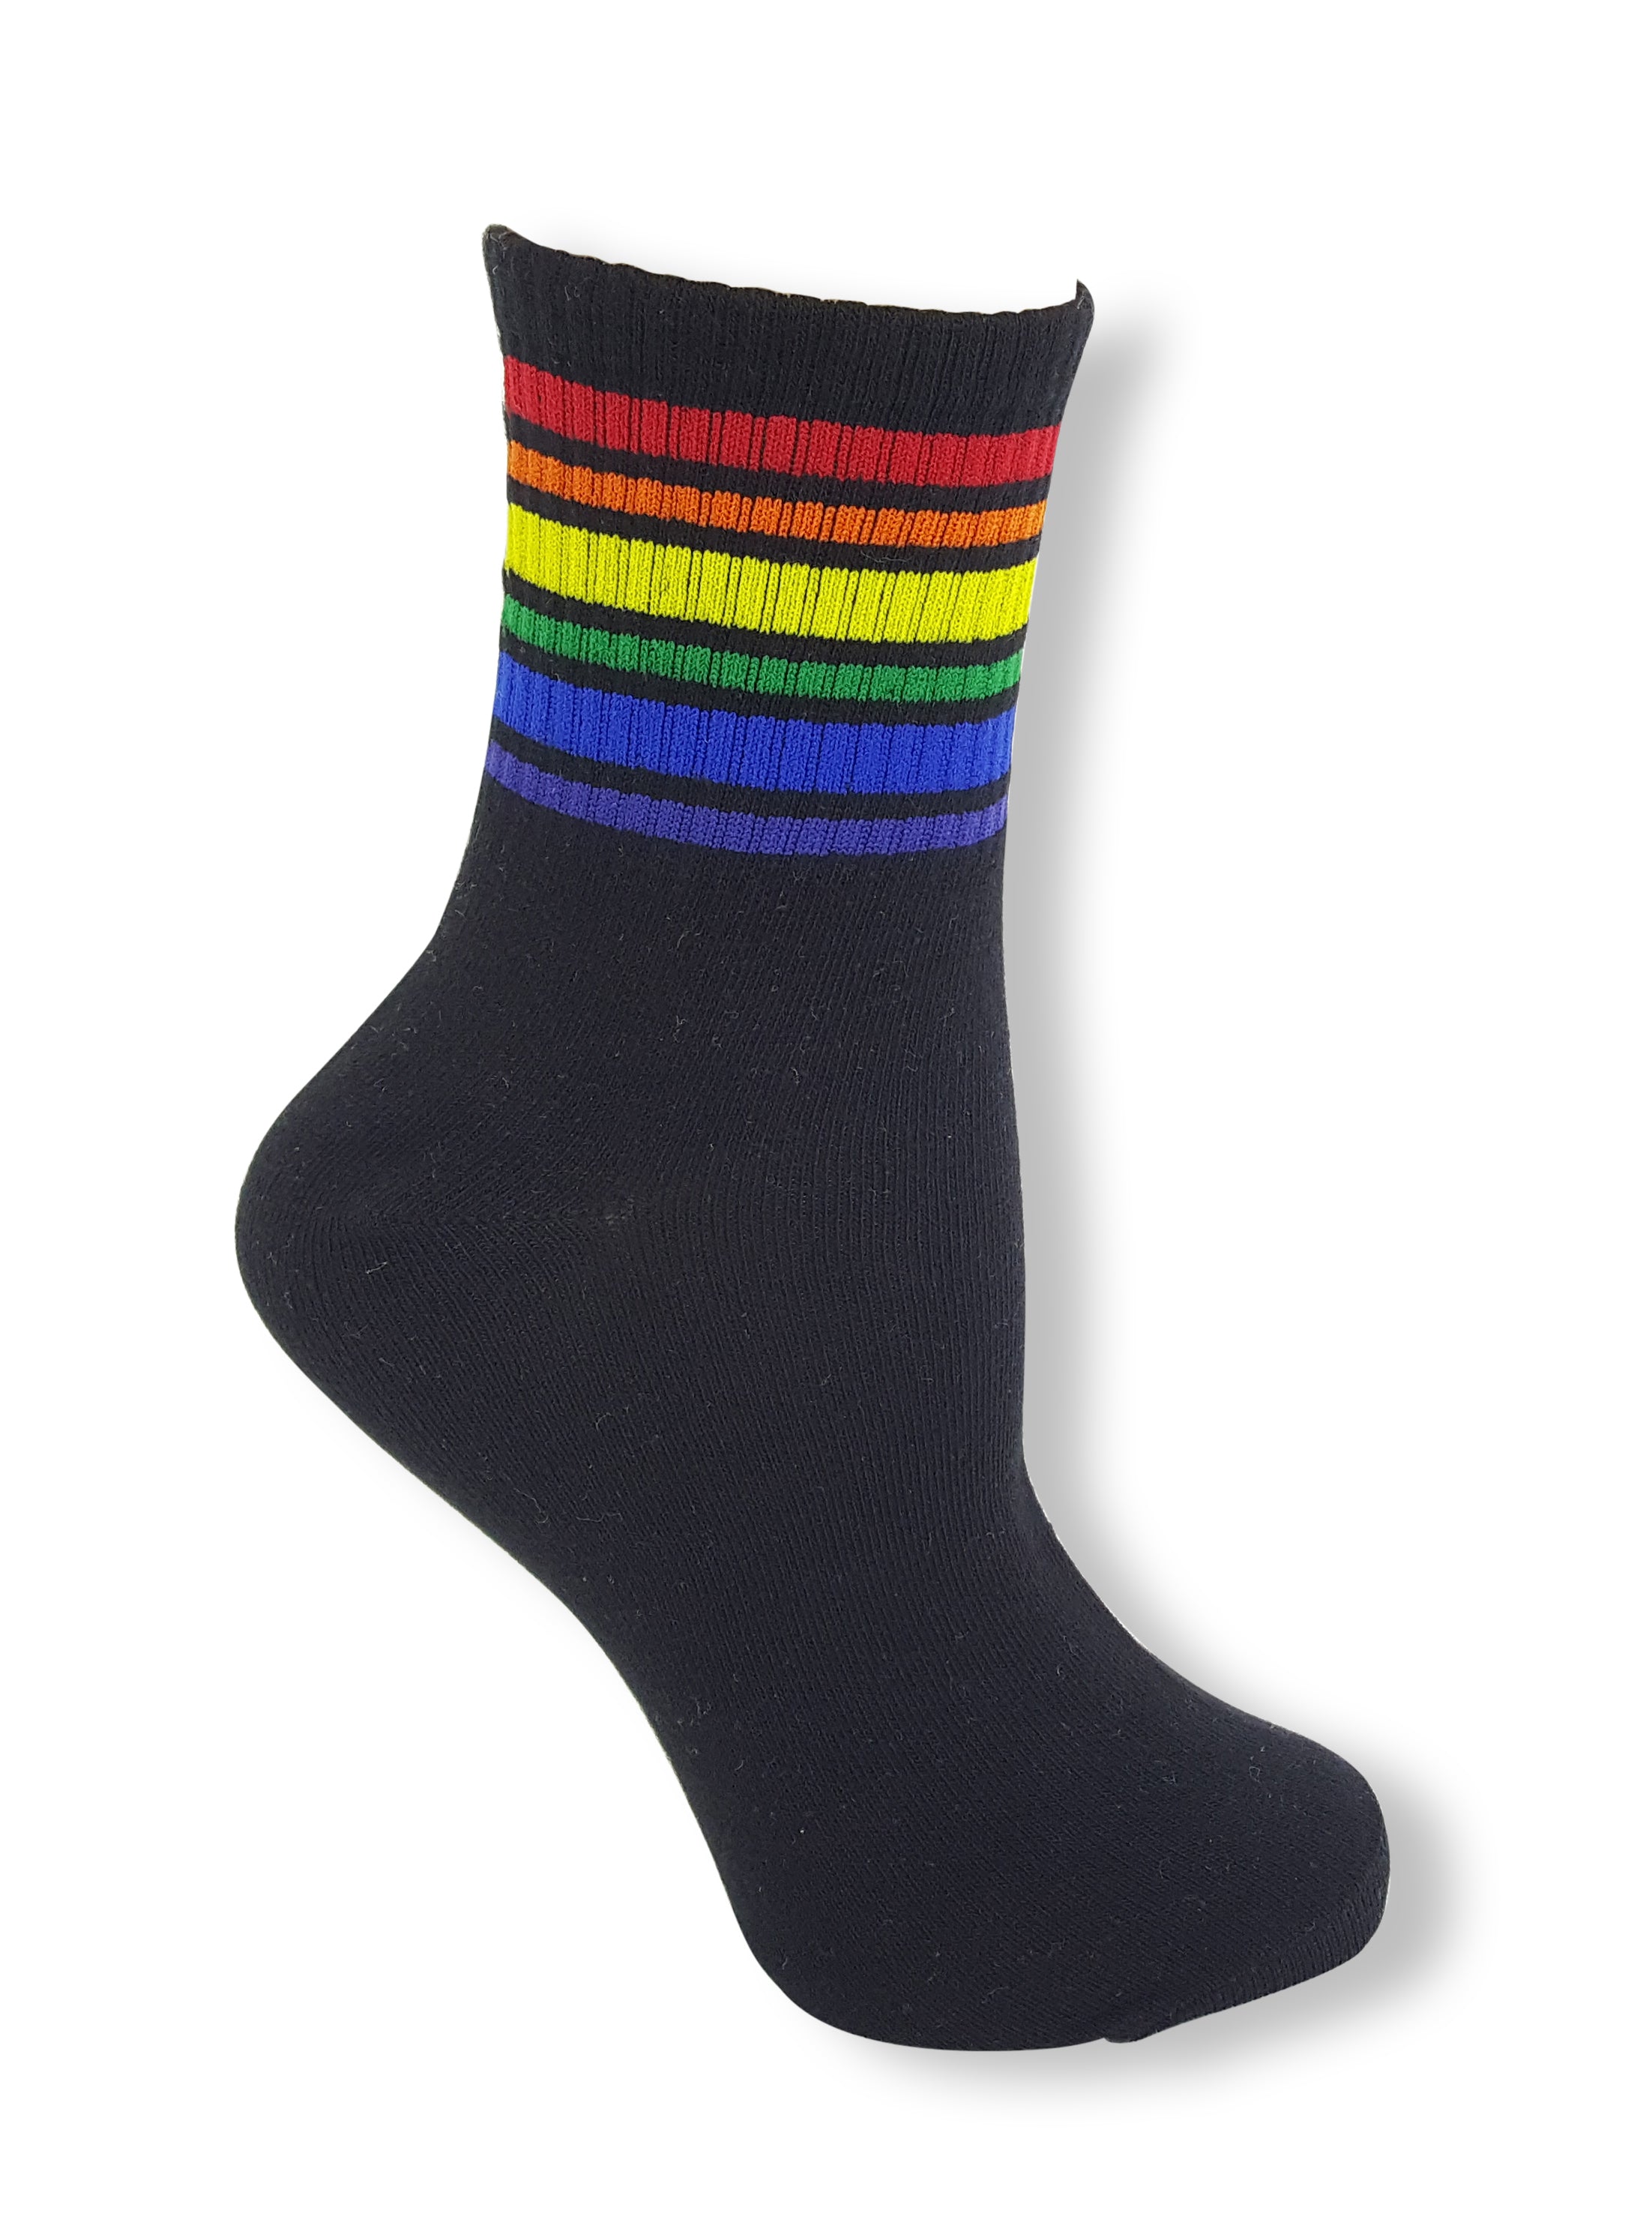 Rainbow Striped Crew Cut Calf Height Ankle Pride Socks